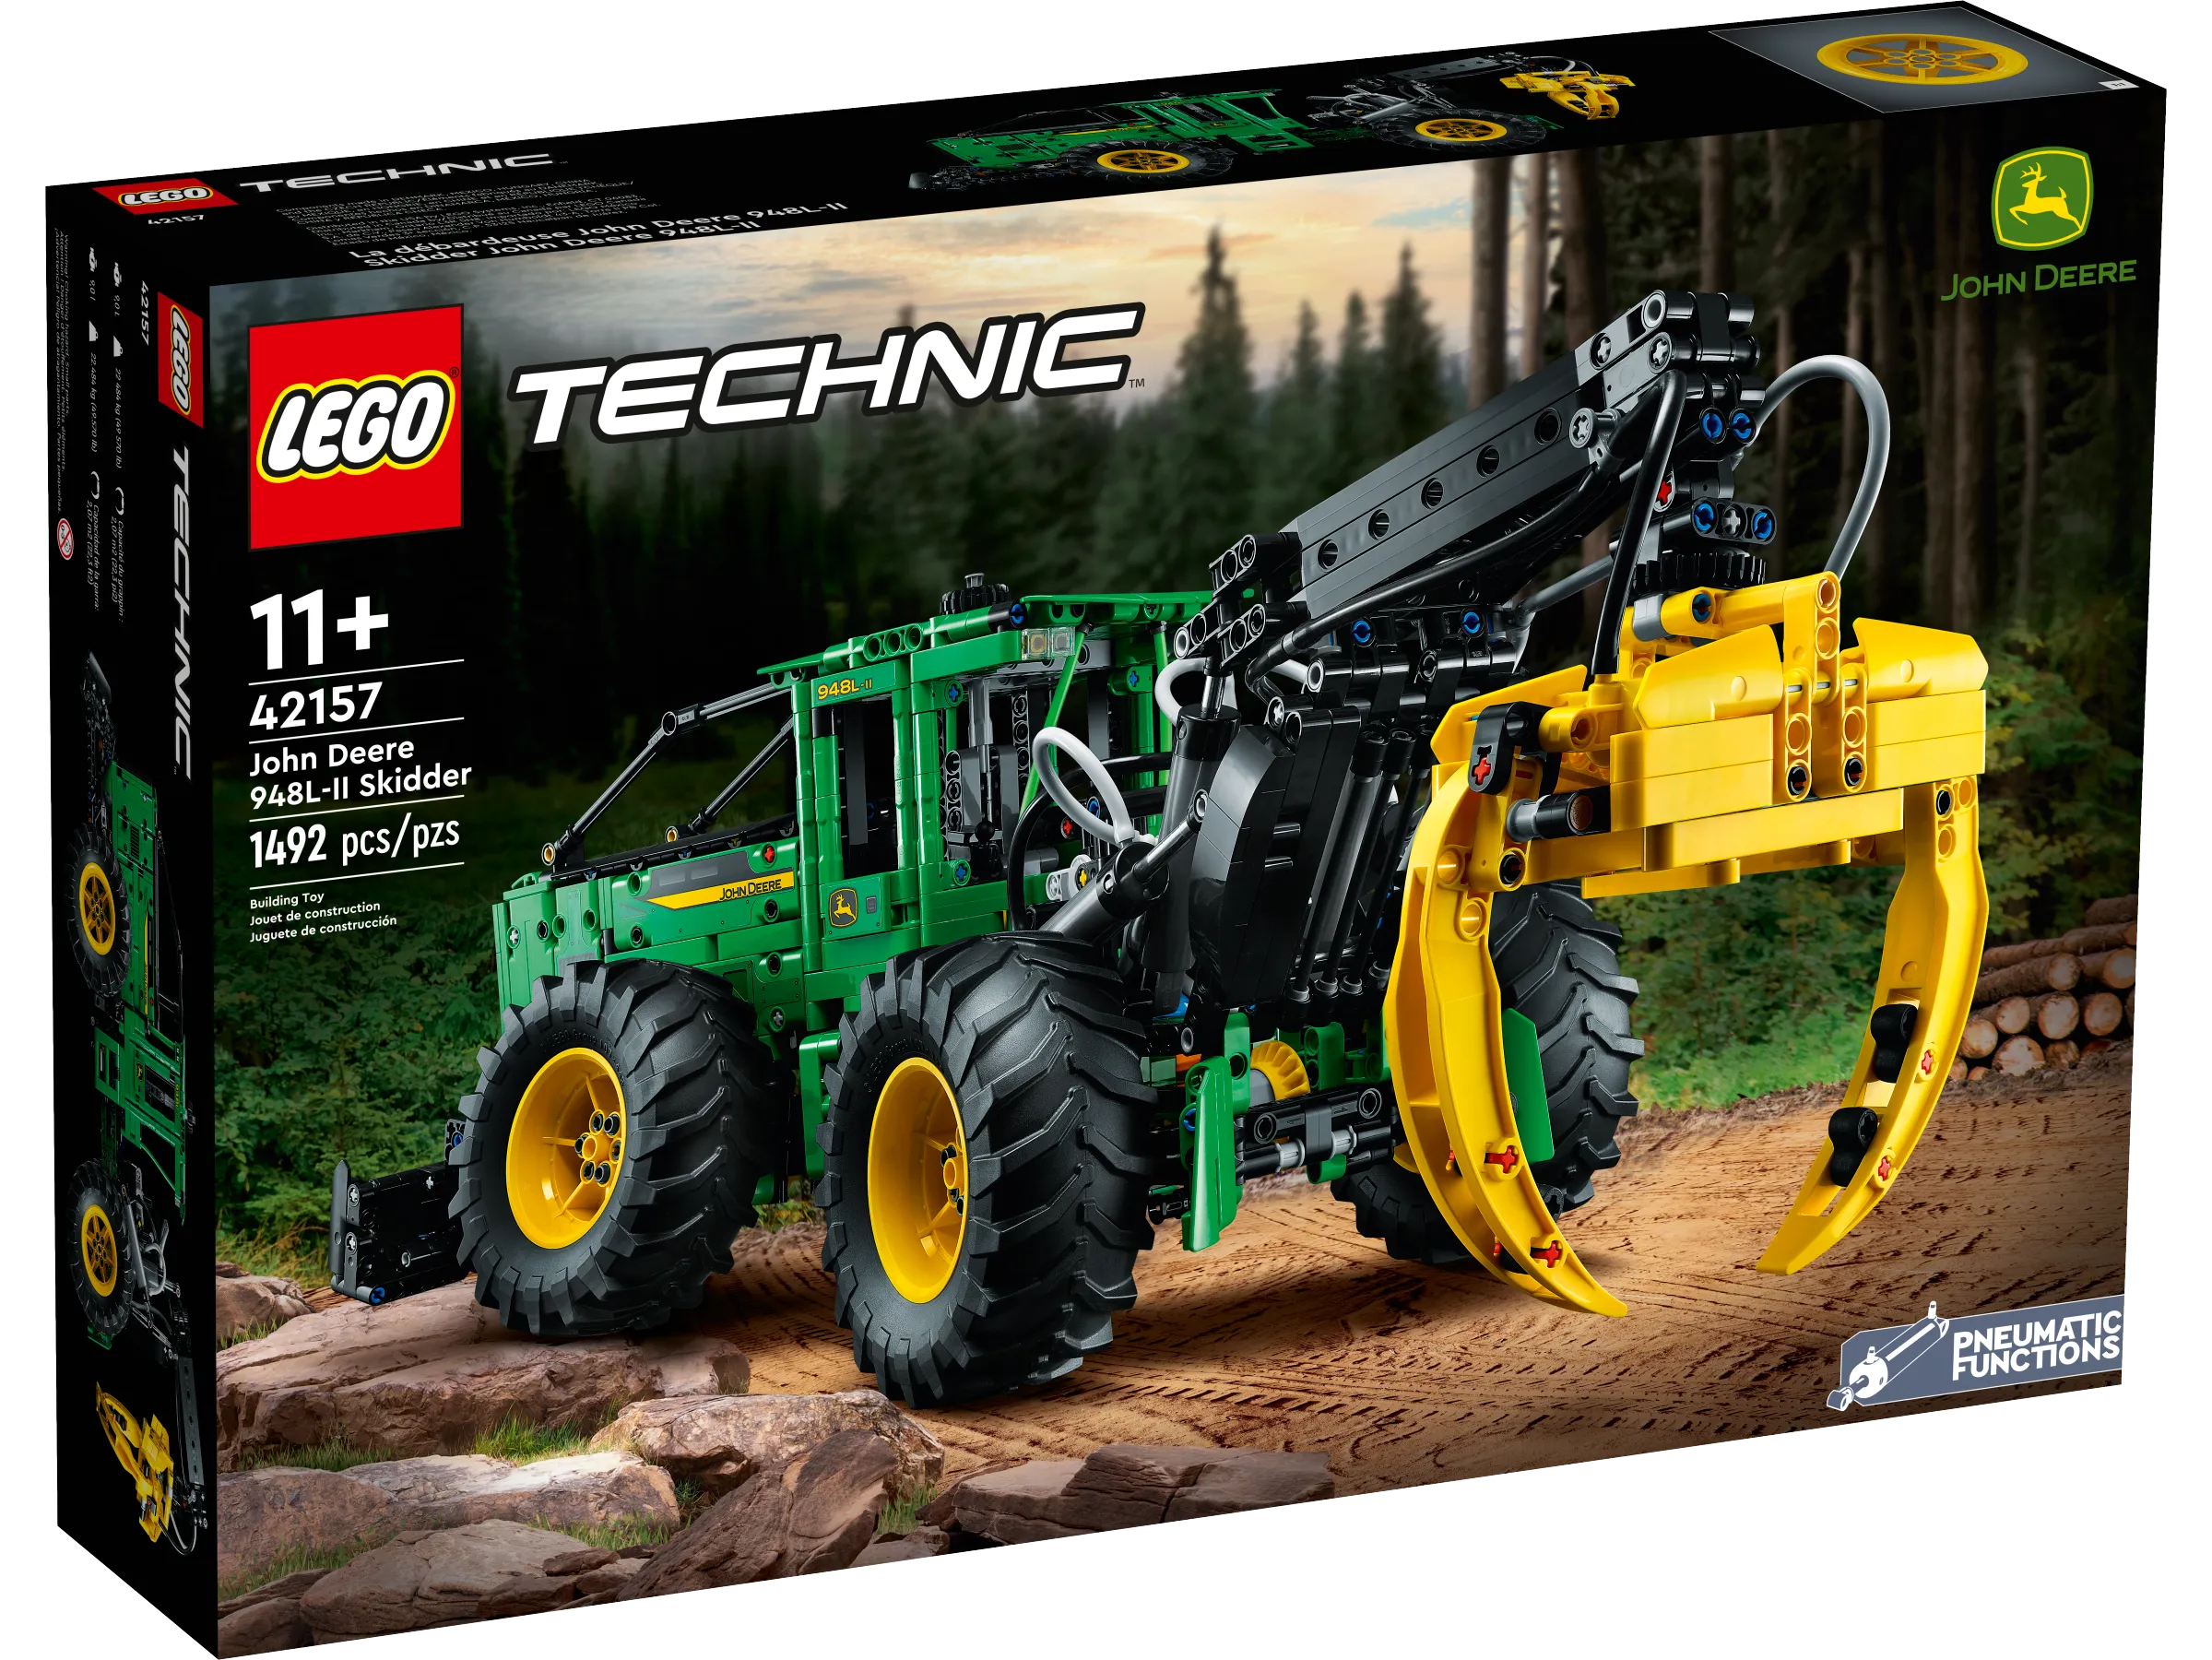 LEGO Technic Yamaha MT-10 SP • Set 42159 • SetDB